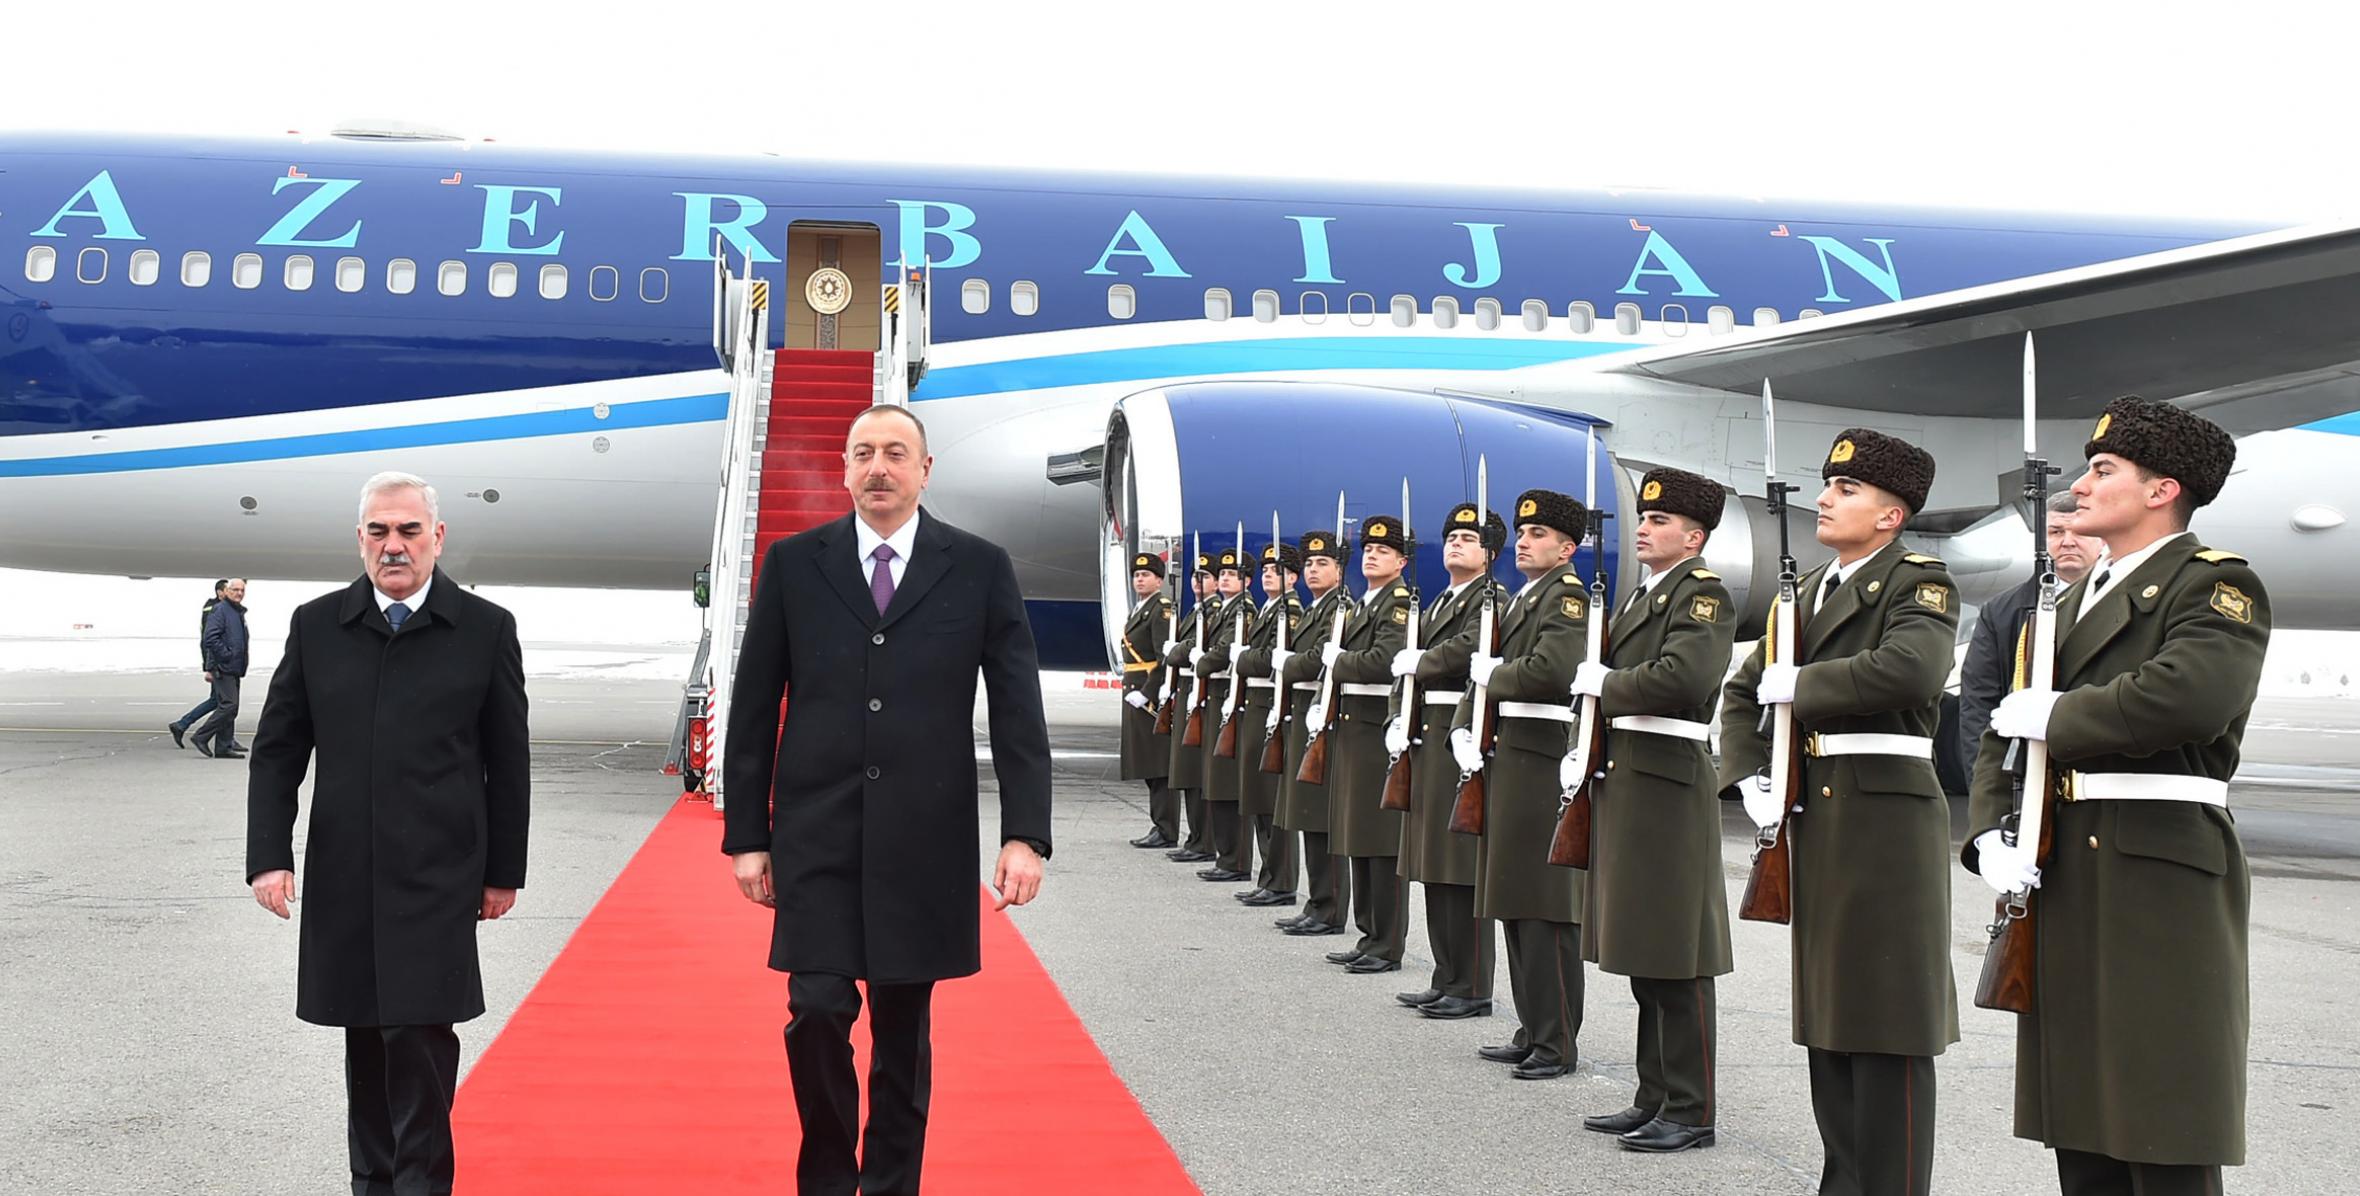 Ilham Aliyev arrived in Nakhchivan Autonomous Republic for visit